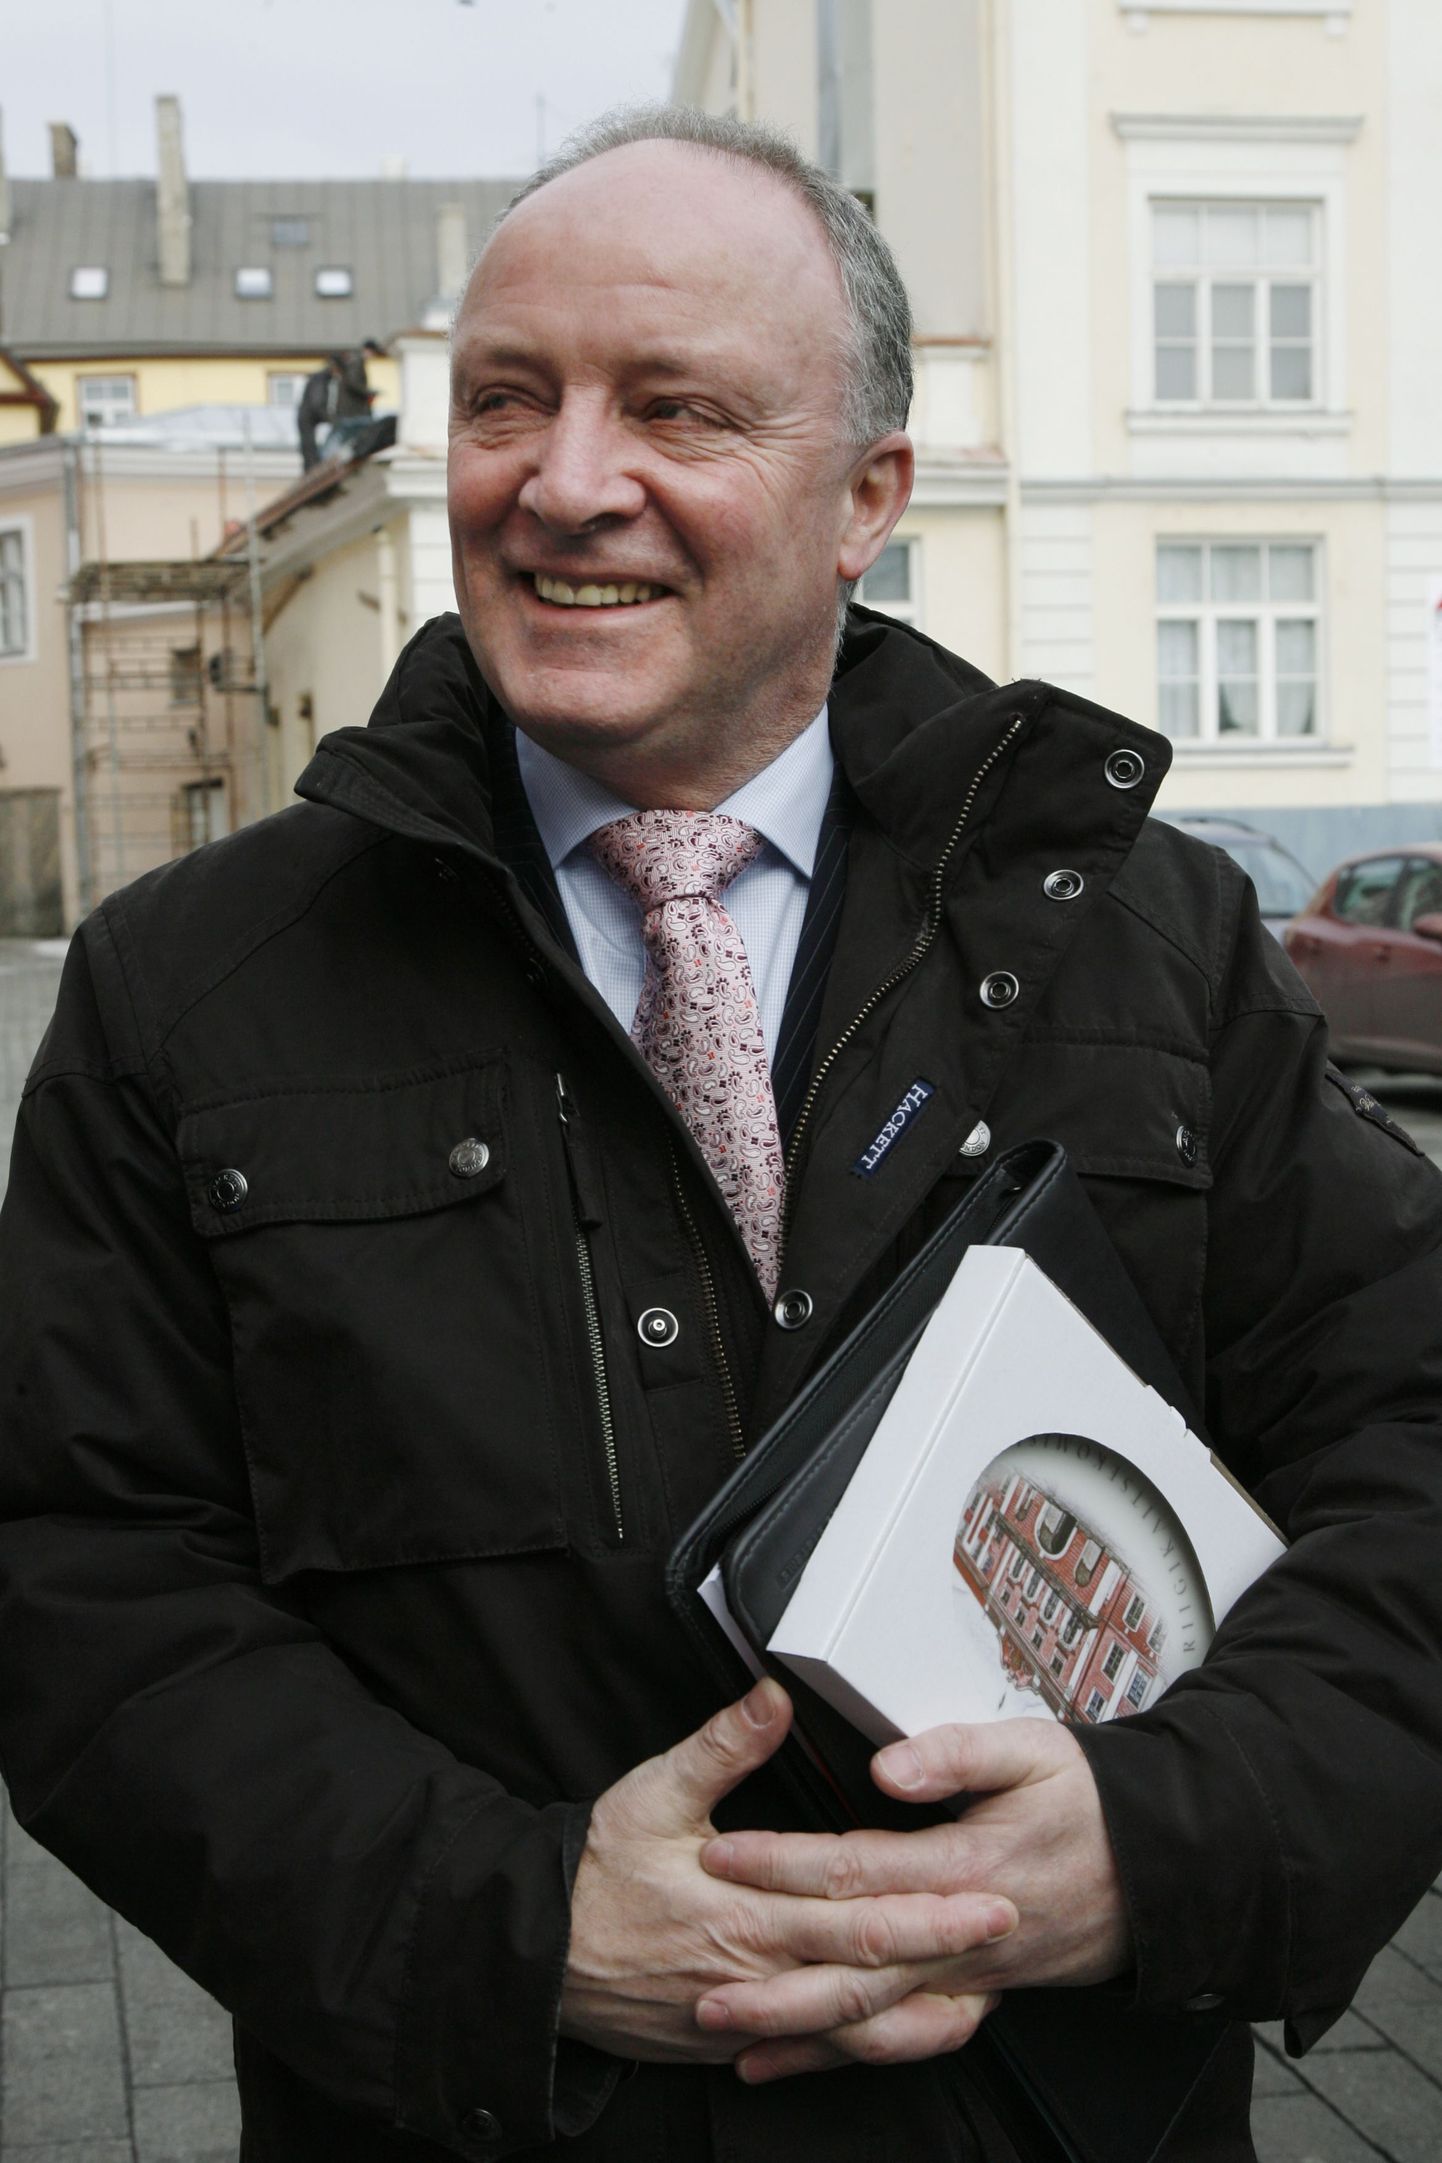 Briti parlamendi liige David Crausby.